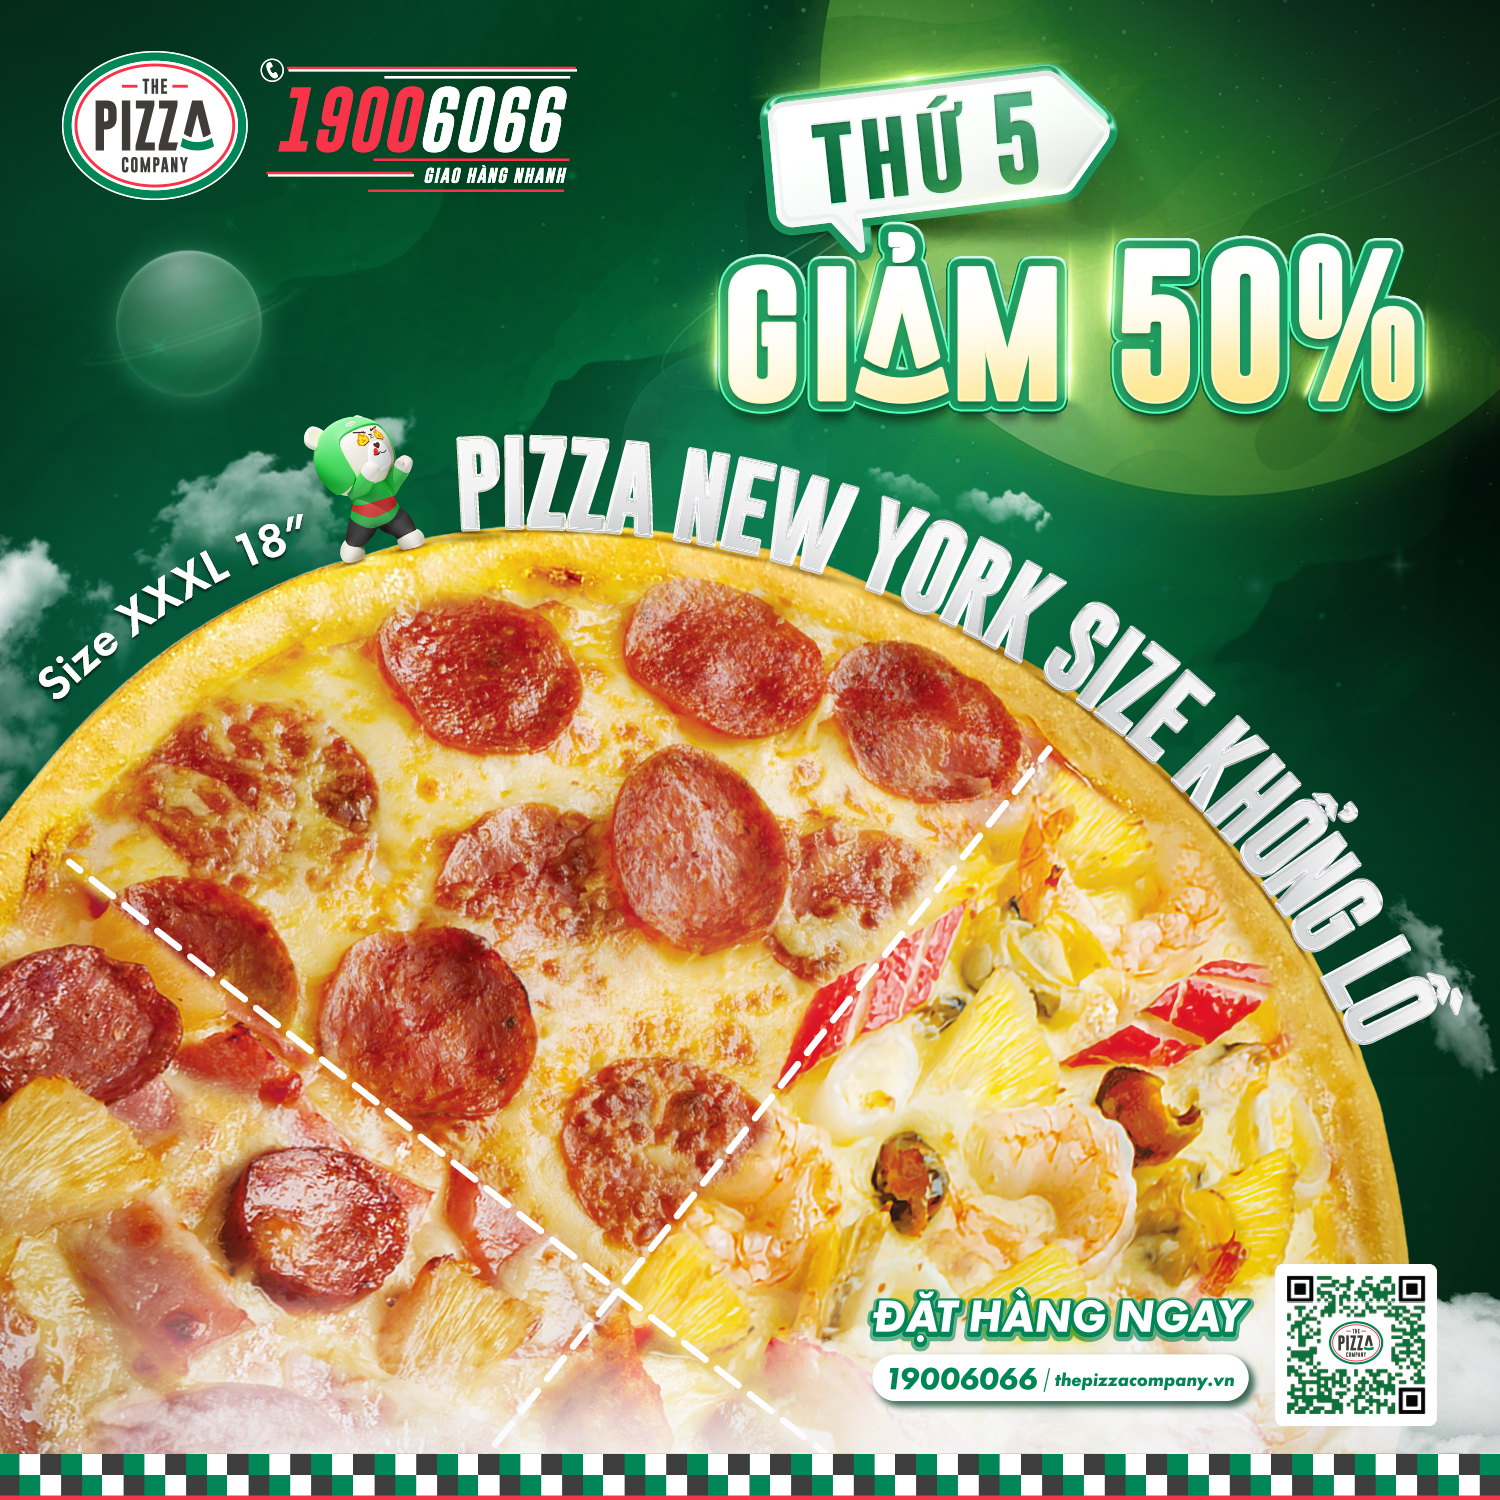 THURSDAY - 50% OFF NEW YORK SIZE GIANT PIZZA